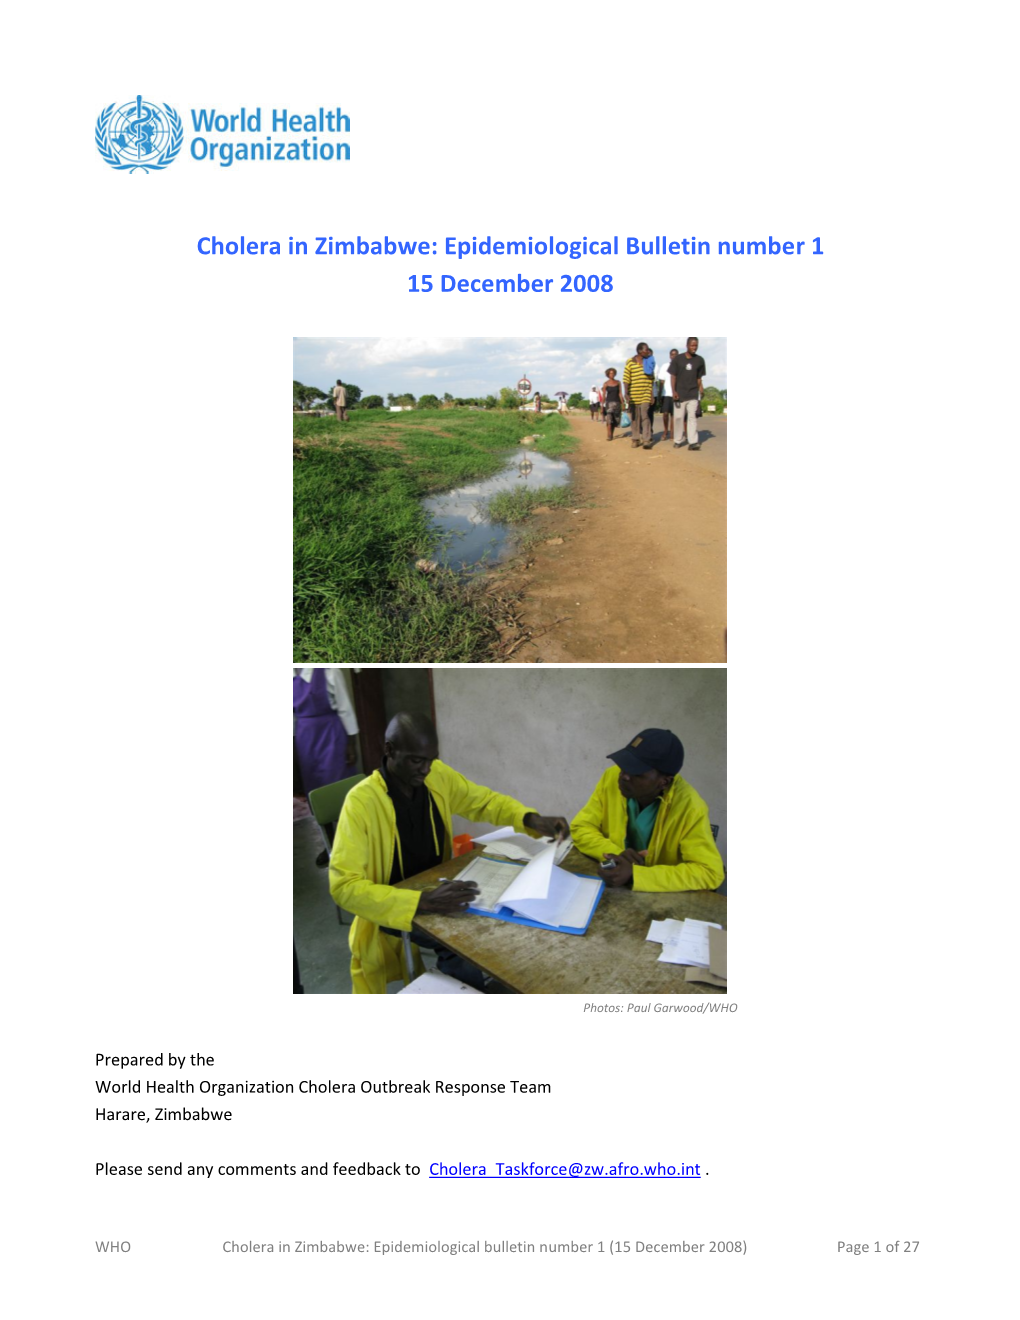 Cholera in Zimbabwe: Epidemiological Bulletin Number 1 15 December 2008